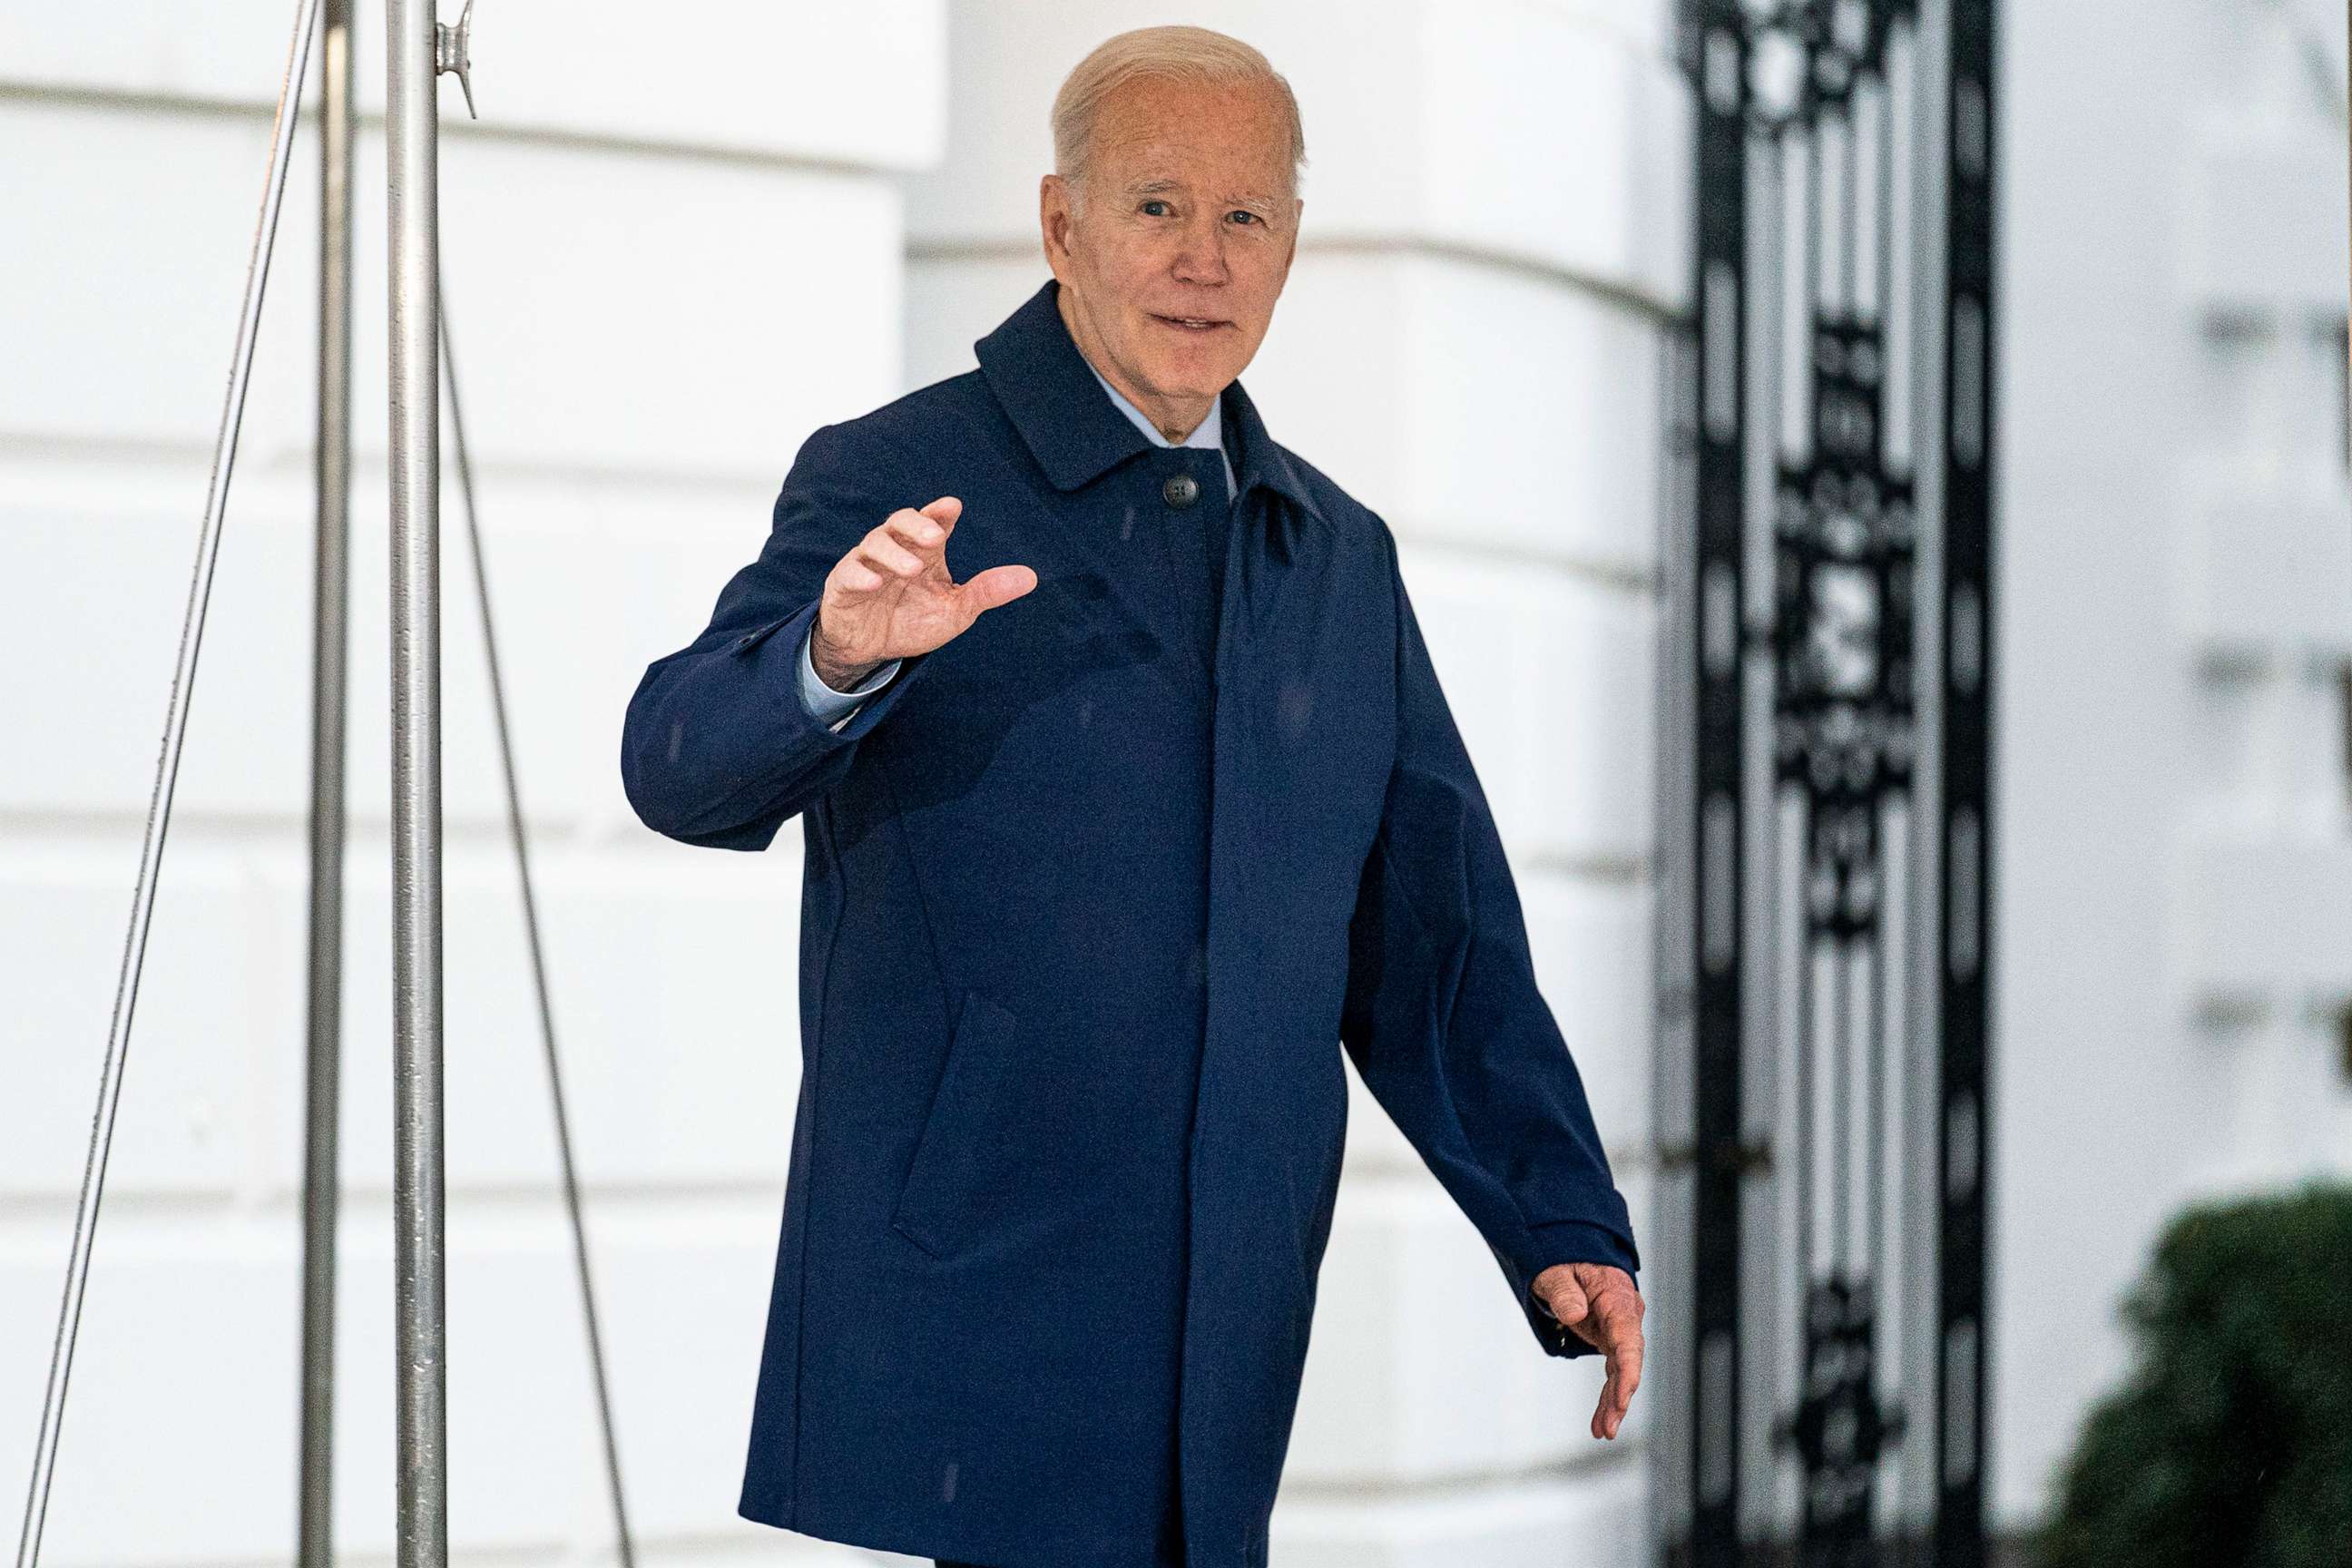 PHOTO: President Joe Biden waves as he leaves the White House in Washington, D.C., March 10, 2023.